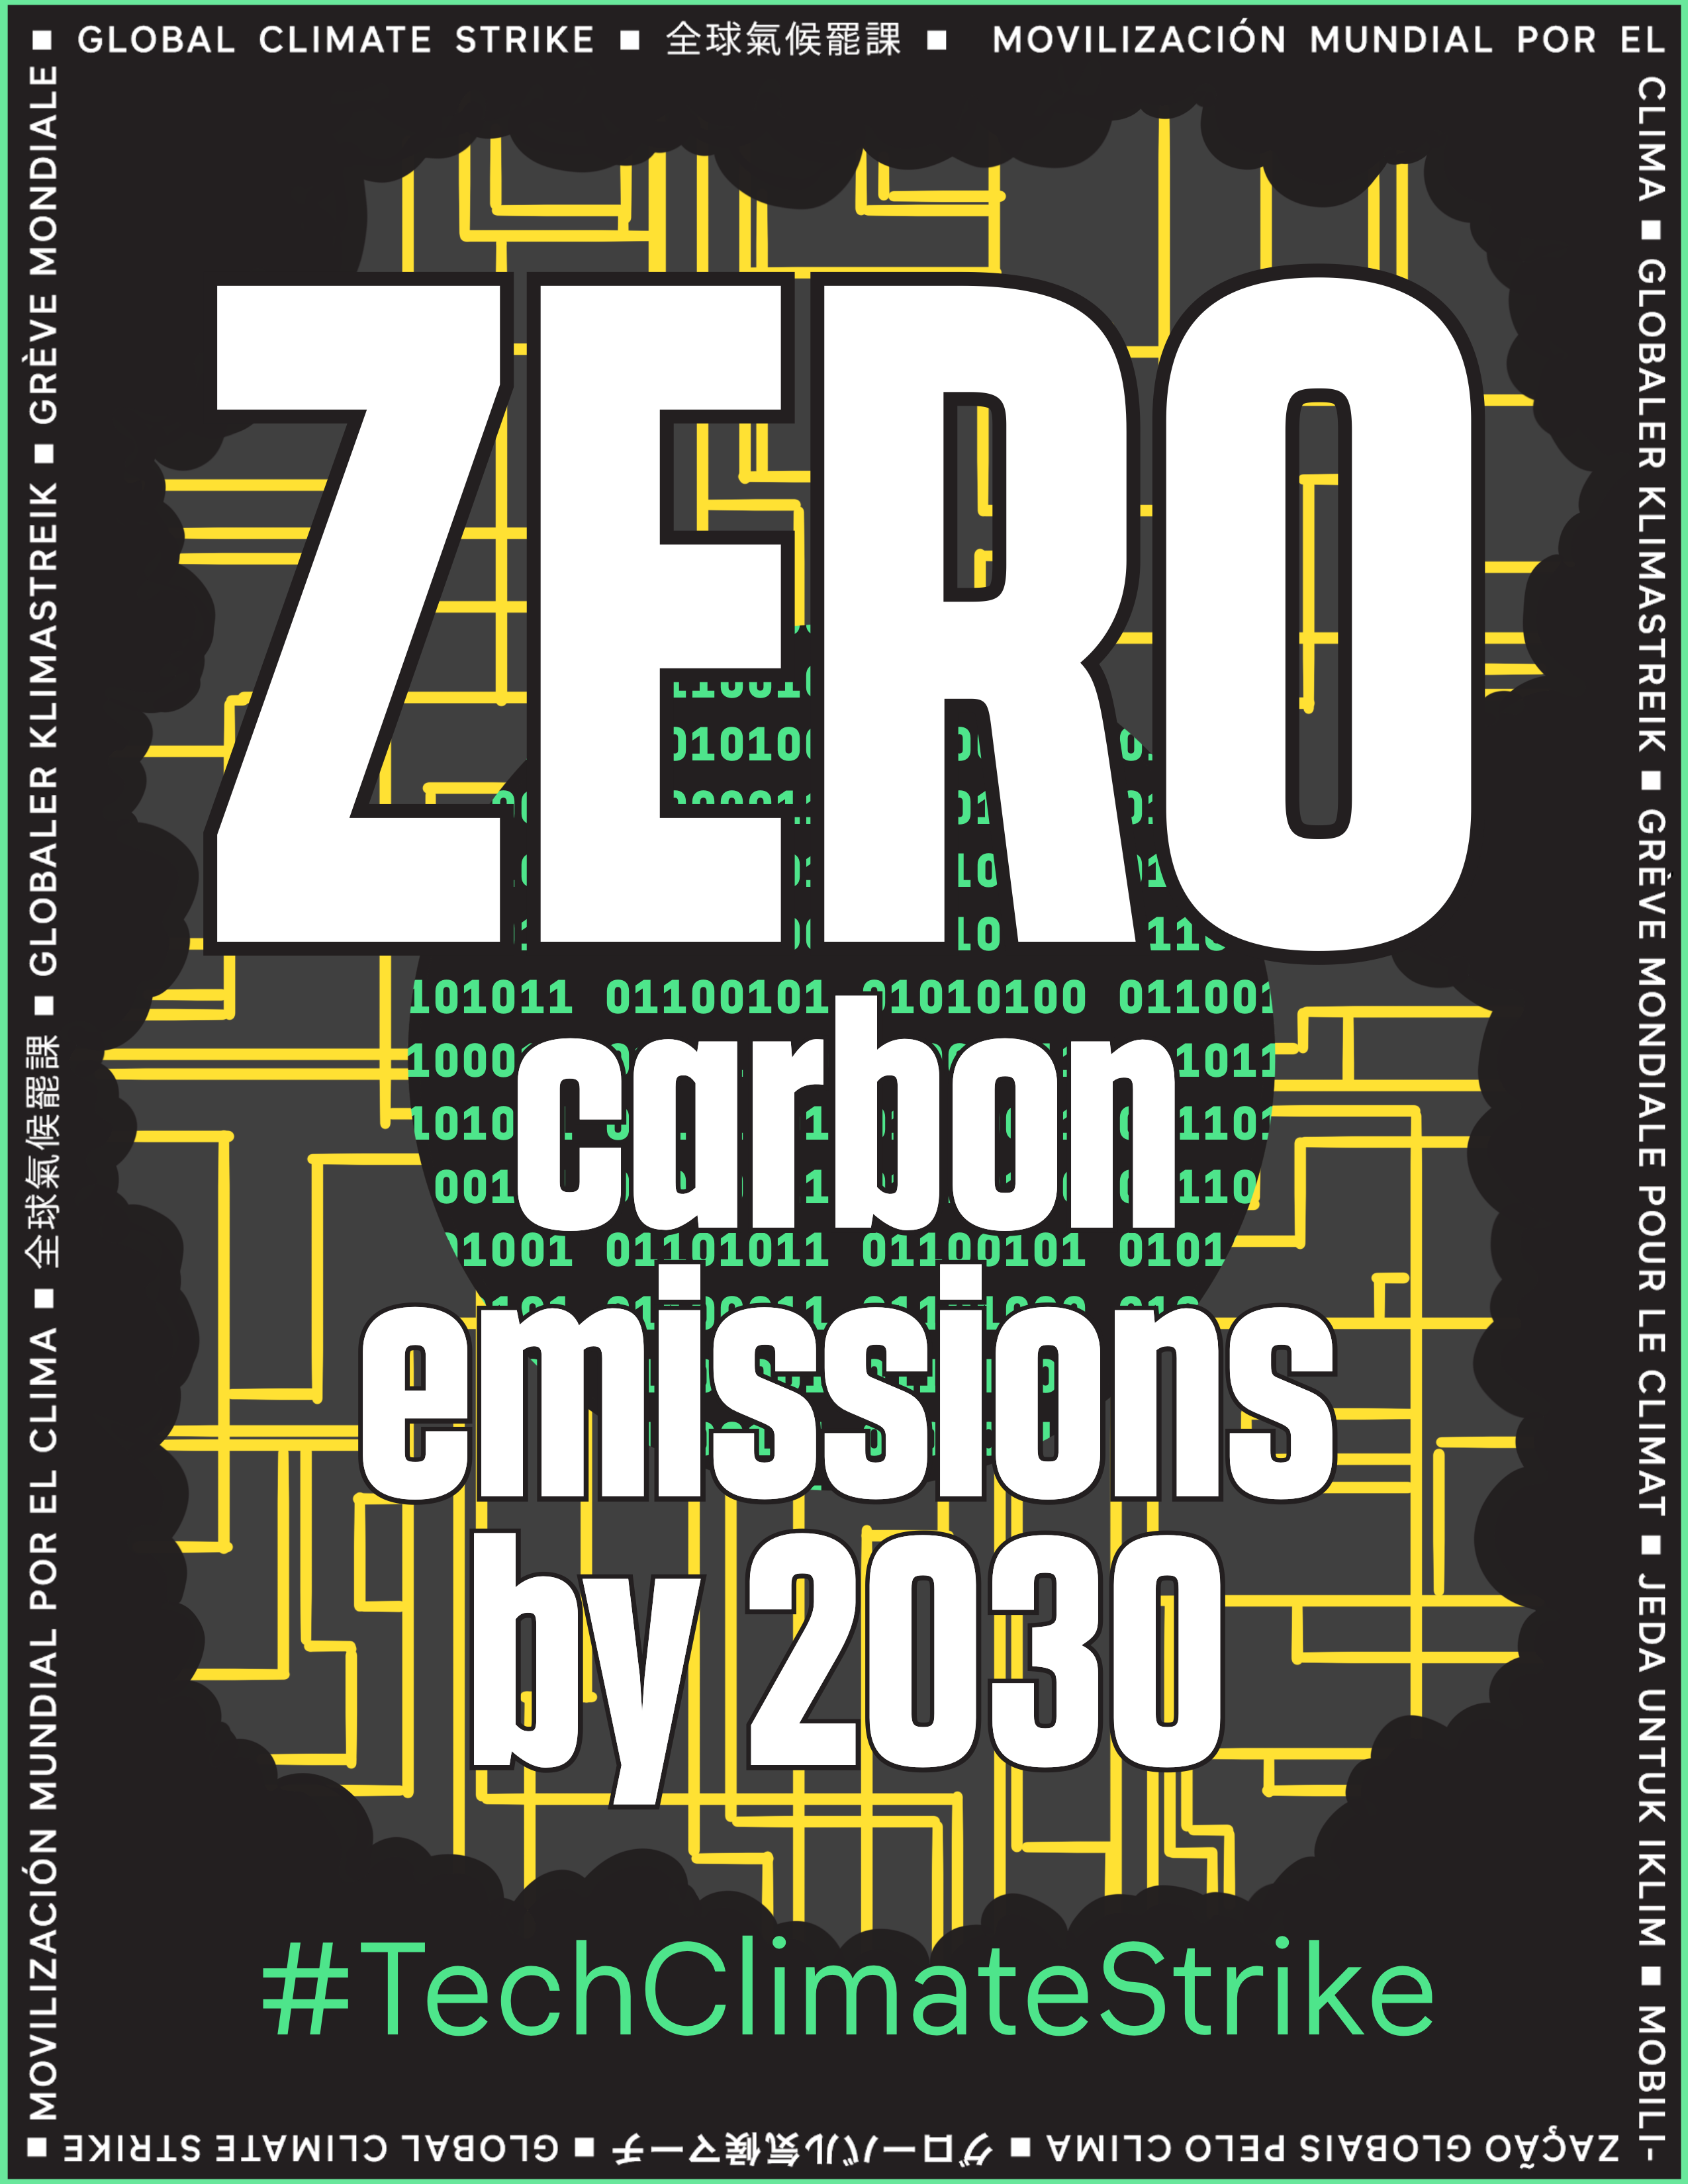 Zero carbon emissions by 2030